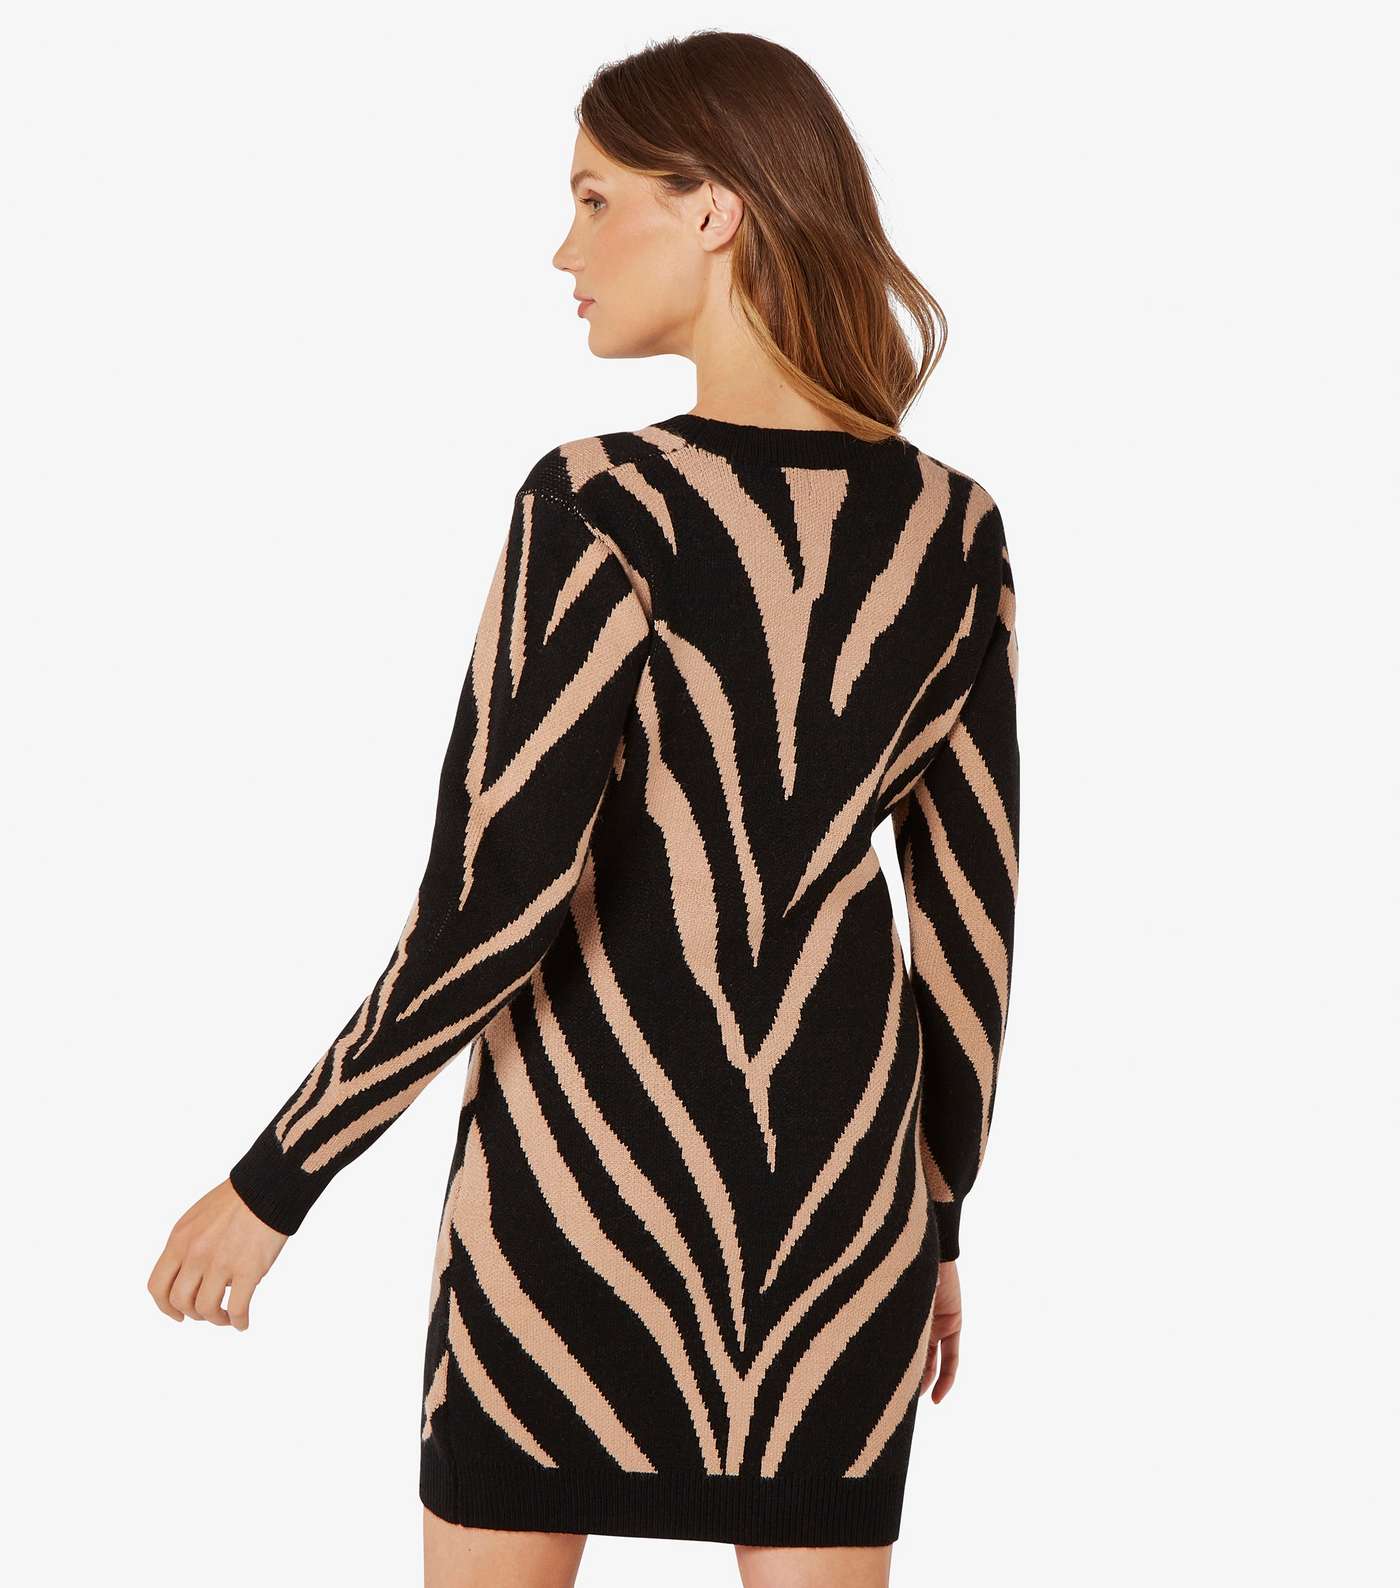 Apricot Zebra Knit Jumper Dress Image 3